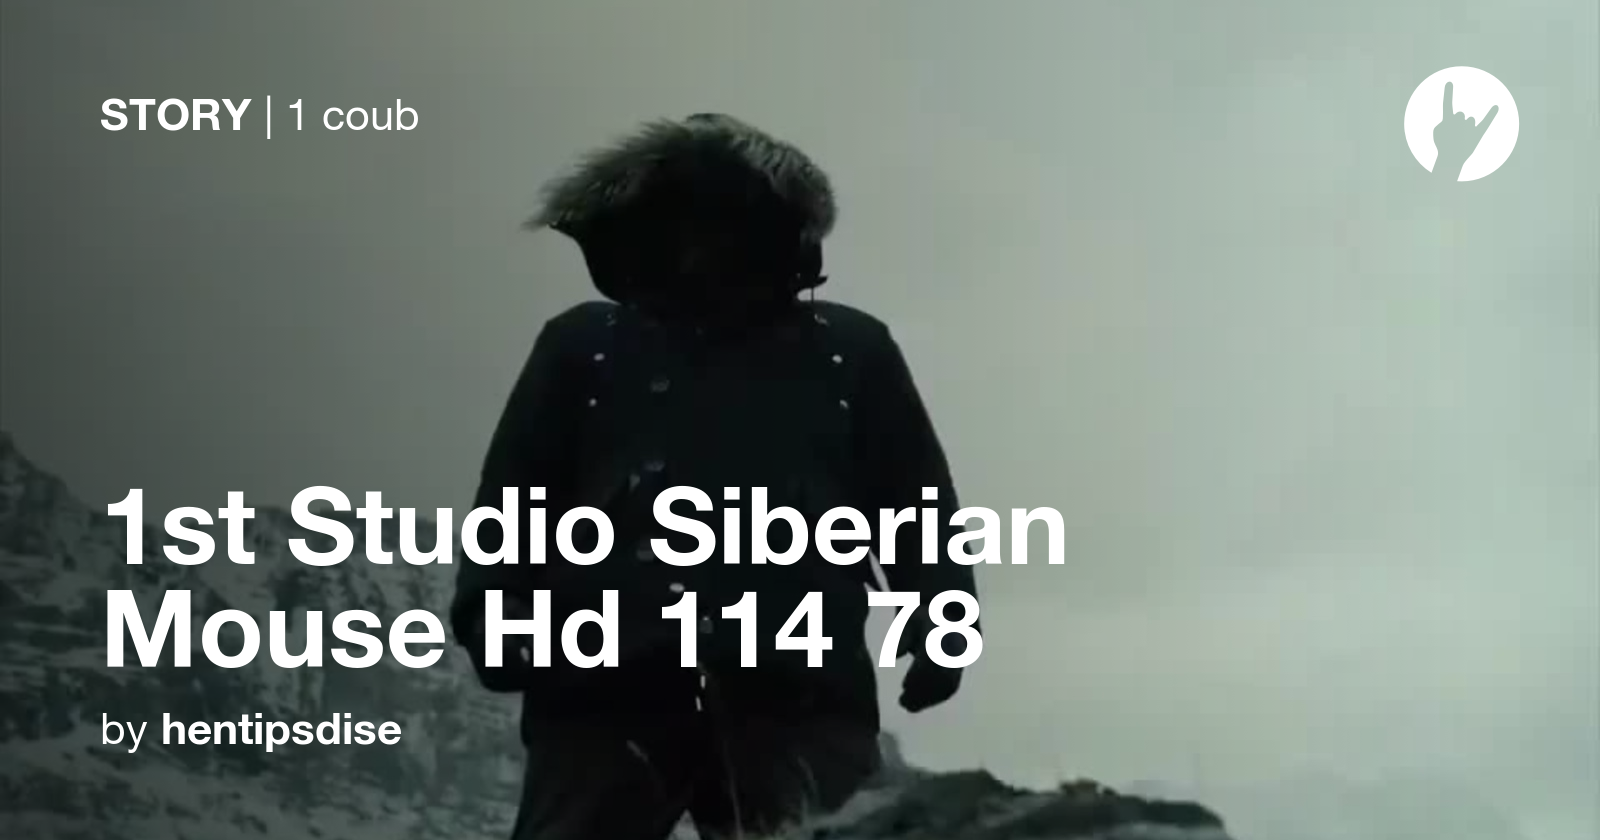 1st studio siberian mouse hd 114